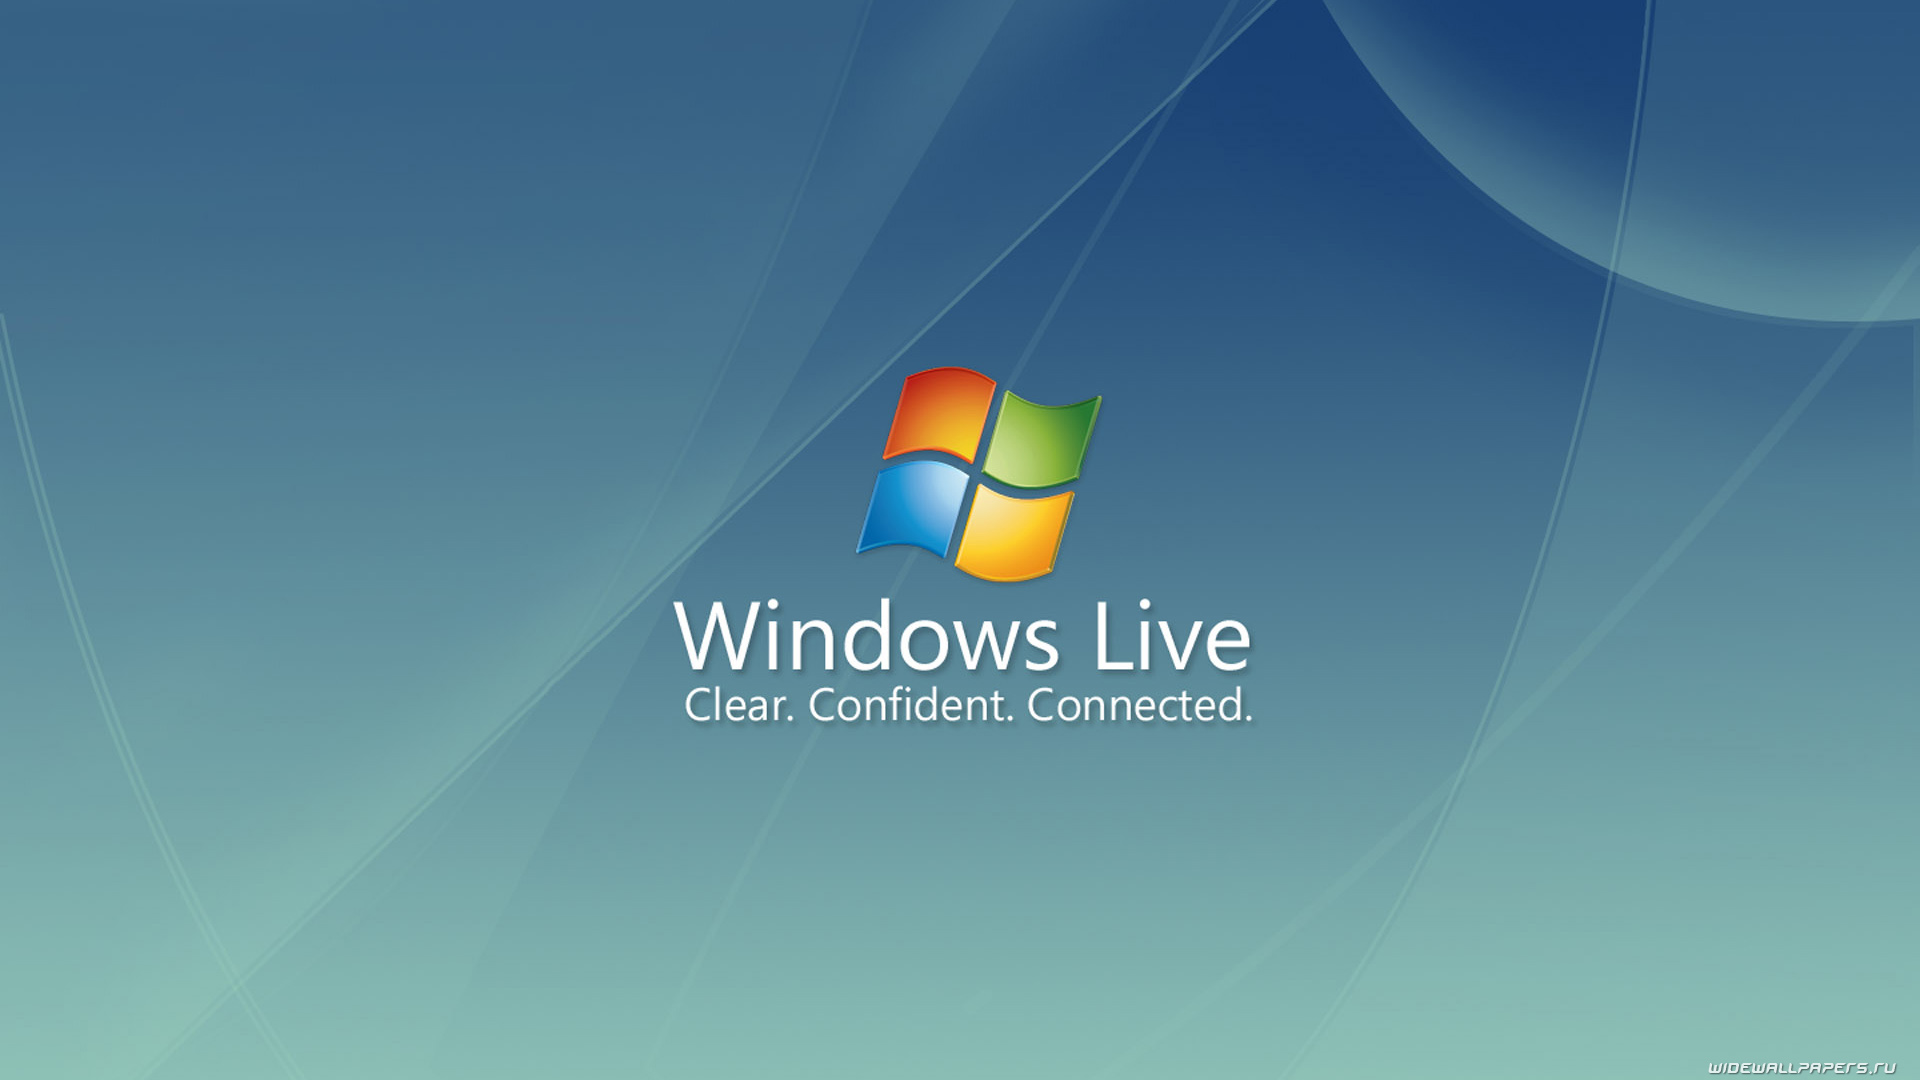 Windows Live Wallpapers HD Wallpaper of Windows